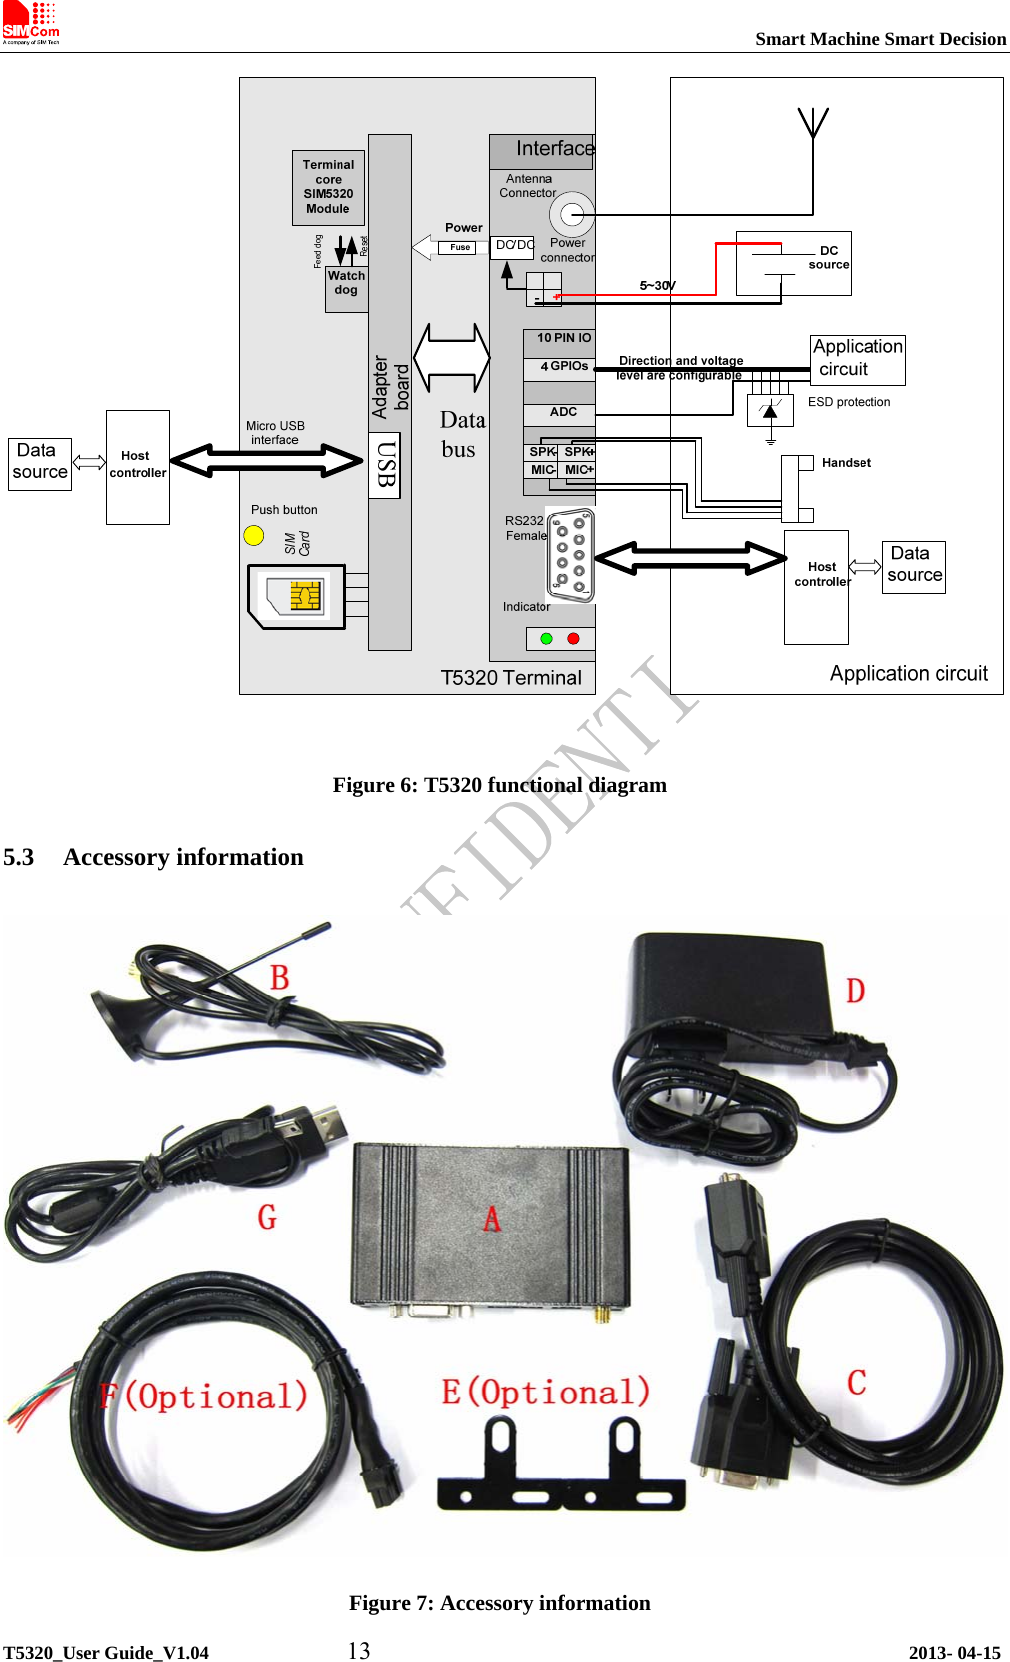                                                                           Smart Machine Smart Decision             T5320_User Guide_V1.04           13                                           2013- 04-15  Figure 6: T5320 functional diagram 5.3 Accessory information  Figure 7: Accessory information 